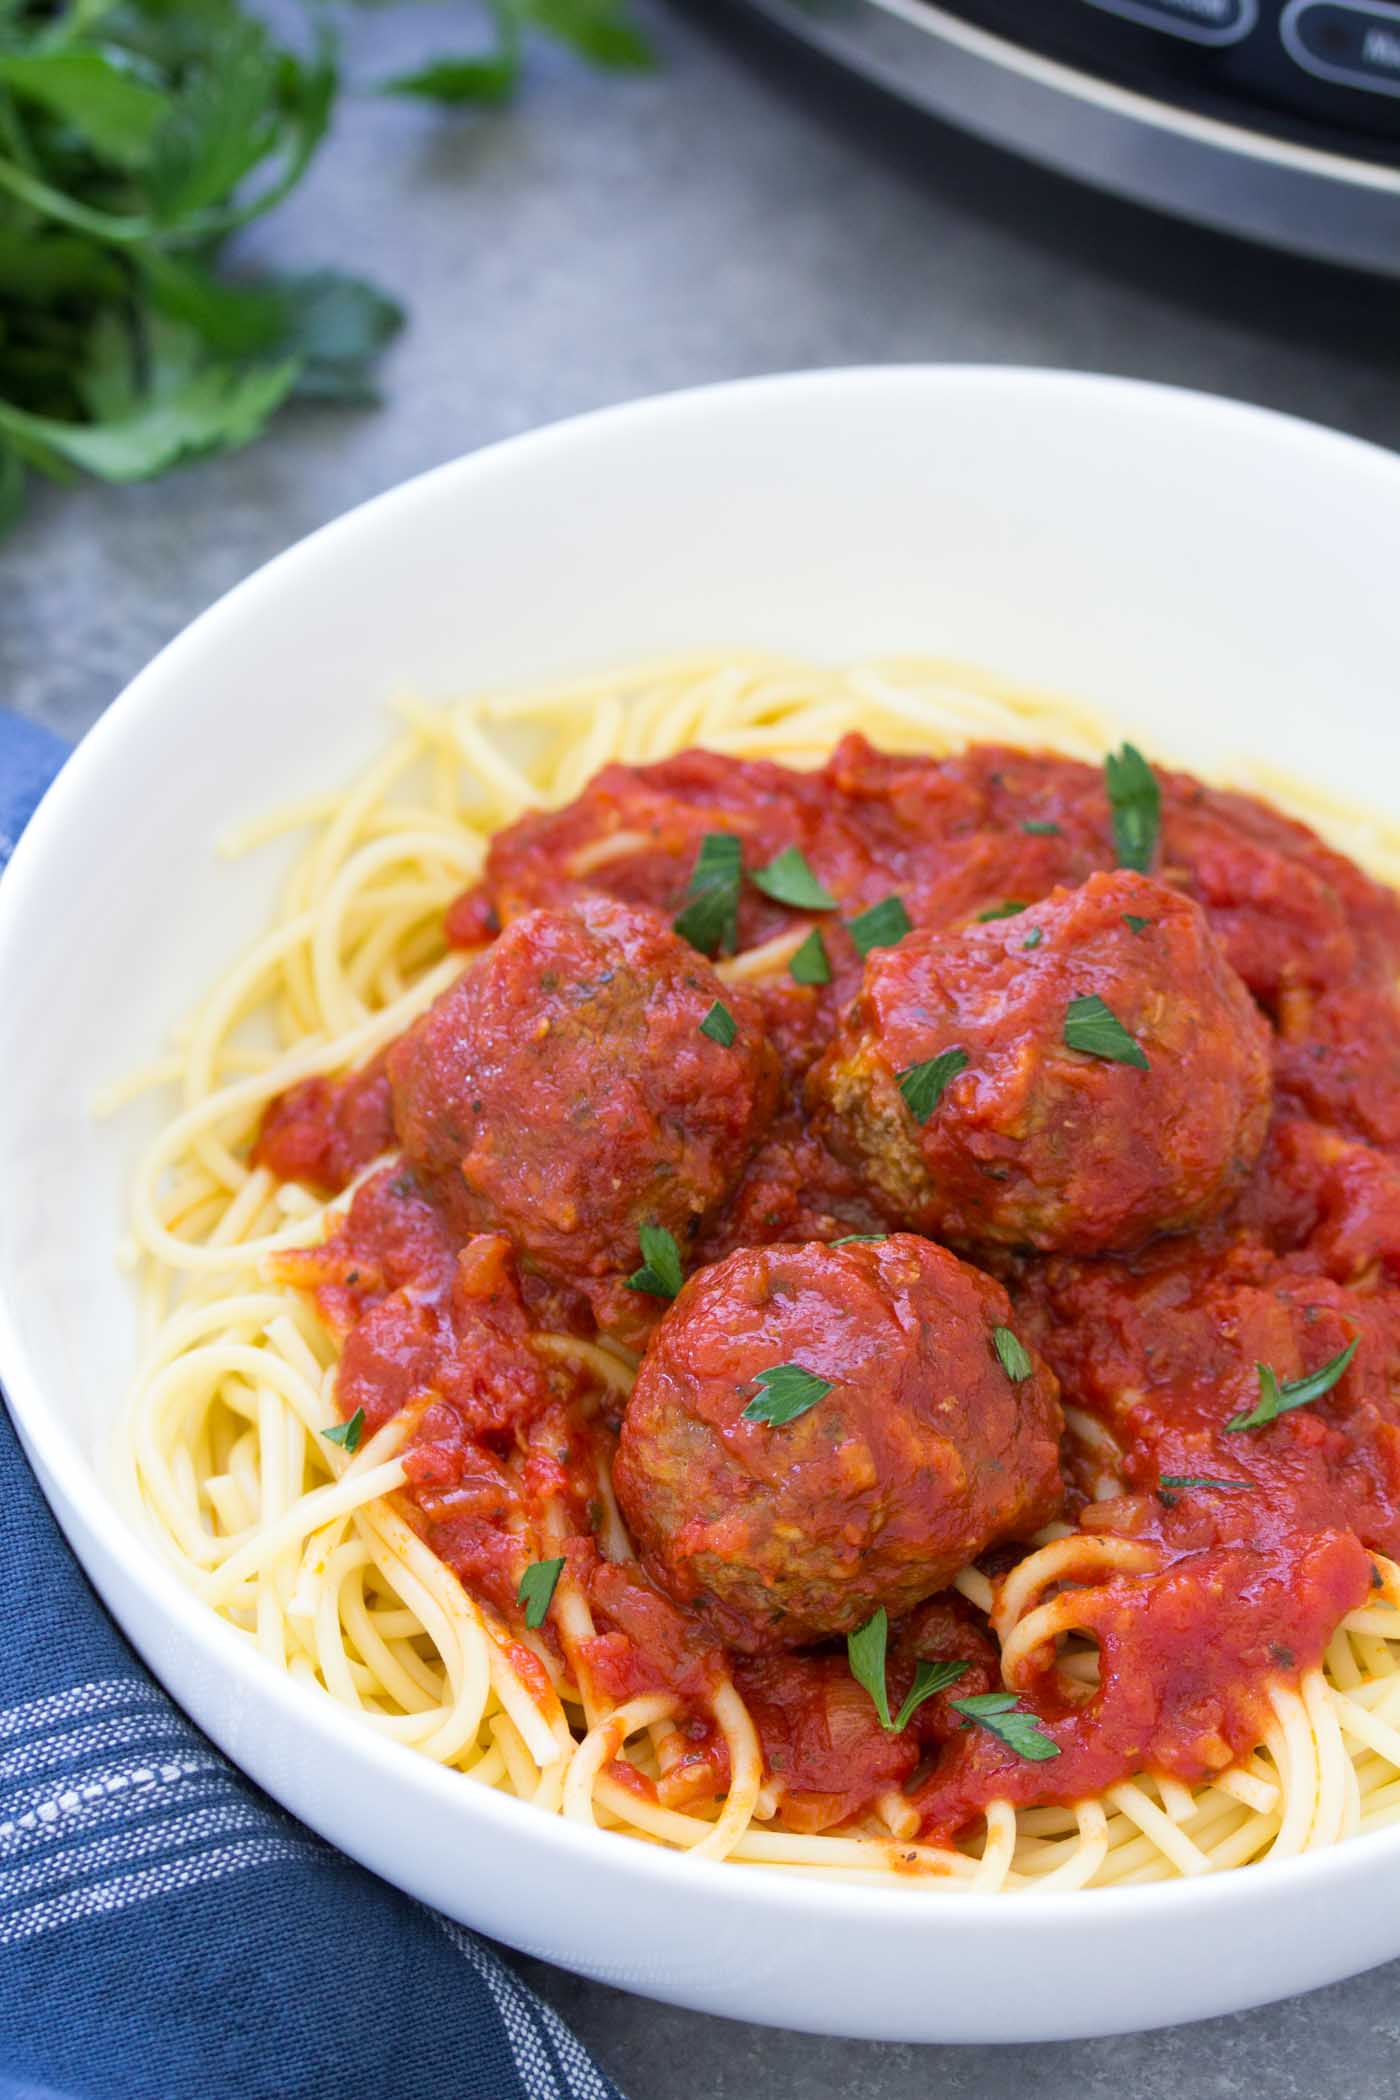 Meatballs and marinara sauce served over spaghetti.